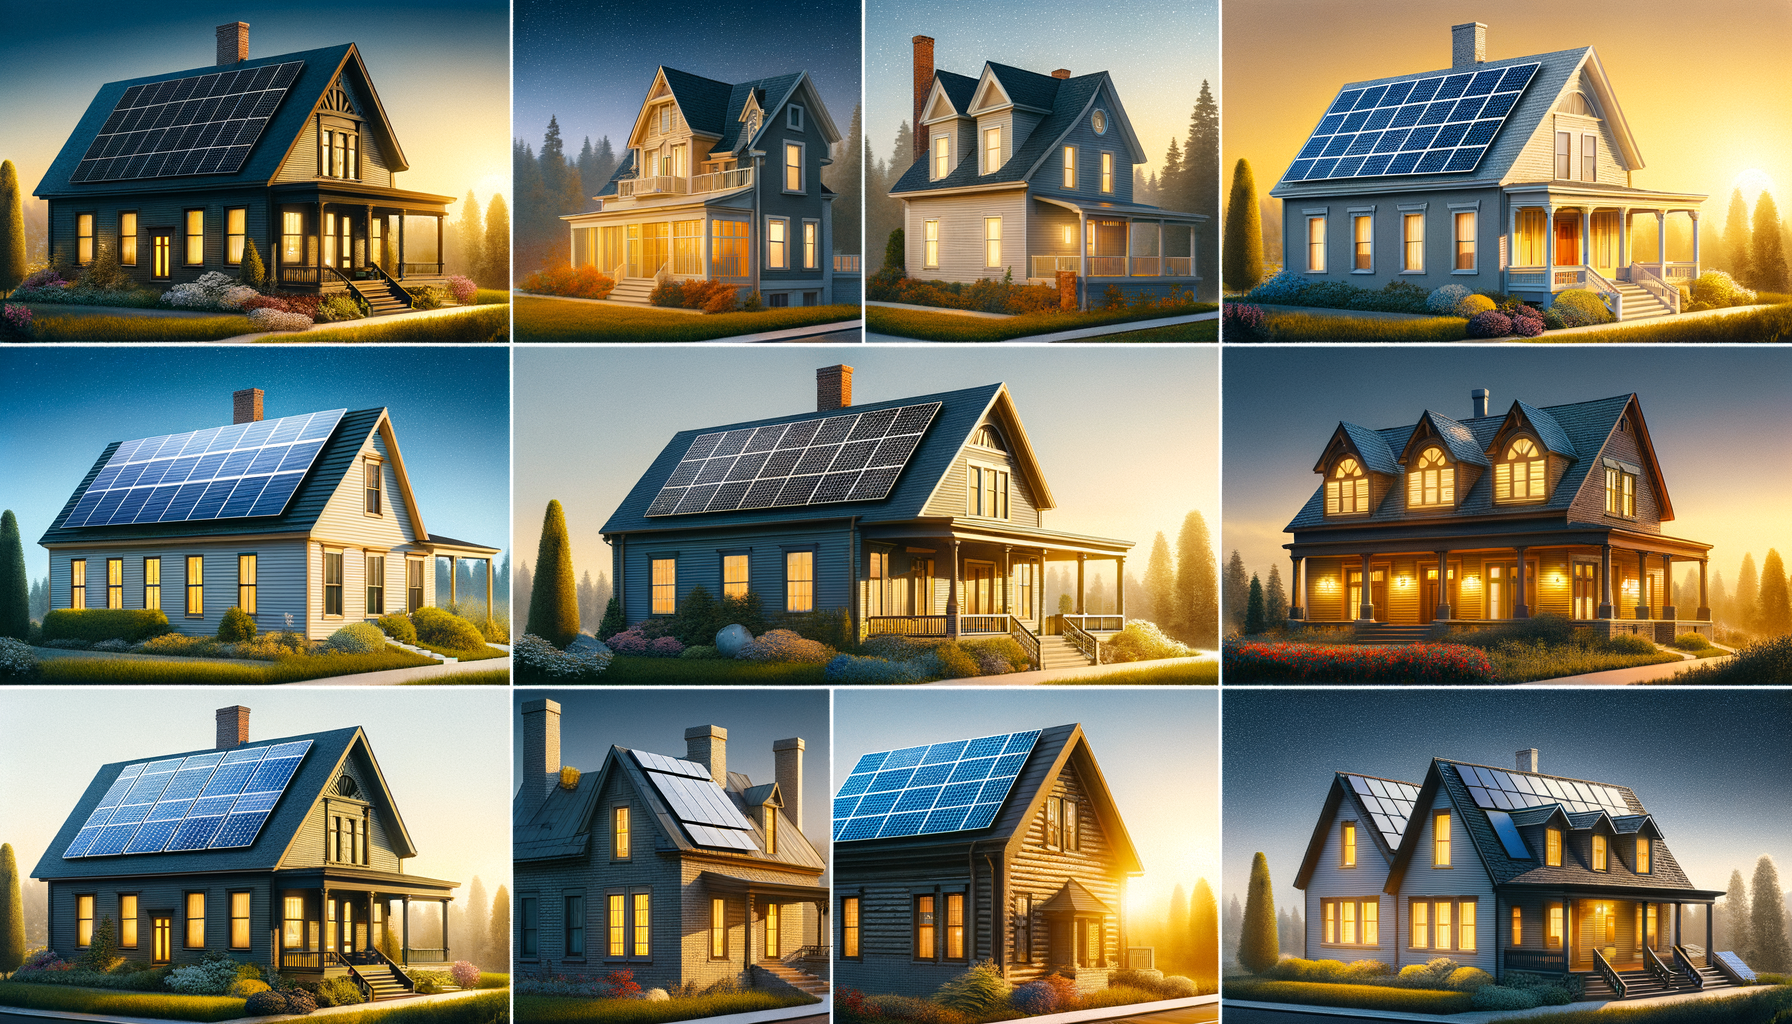 ALT: Various rooftop solar panel installations